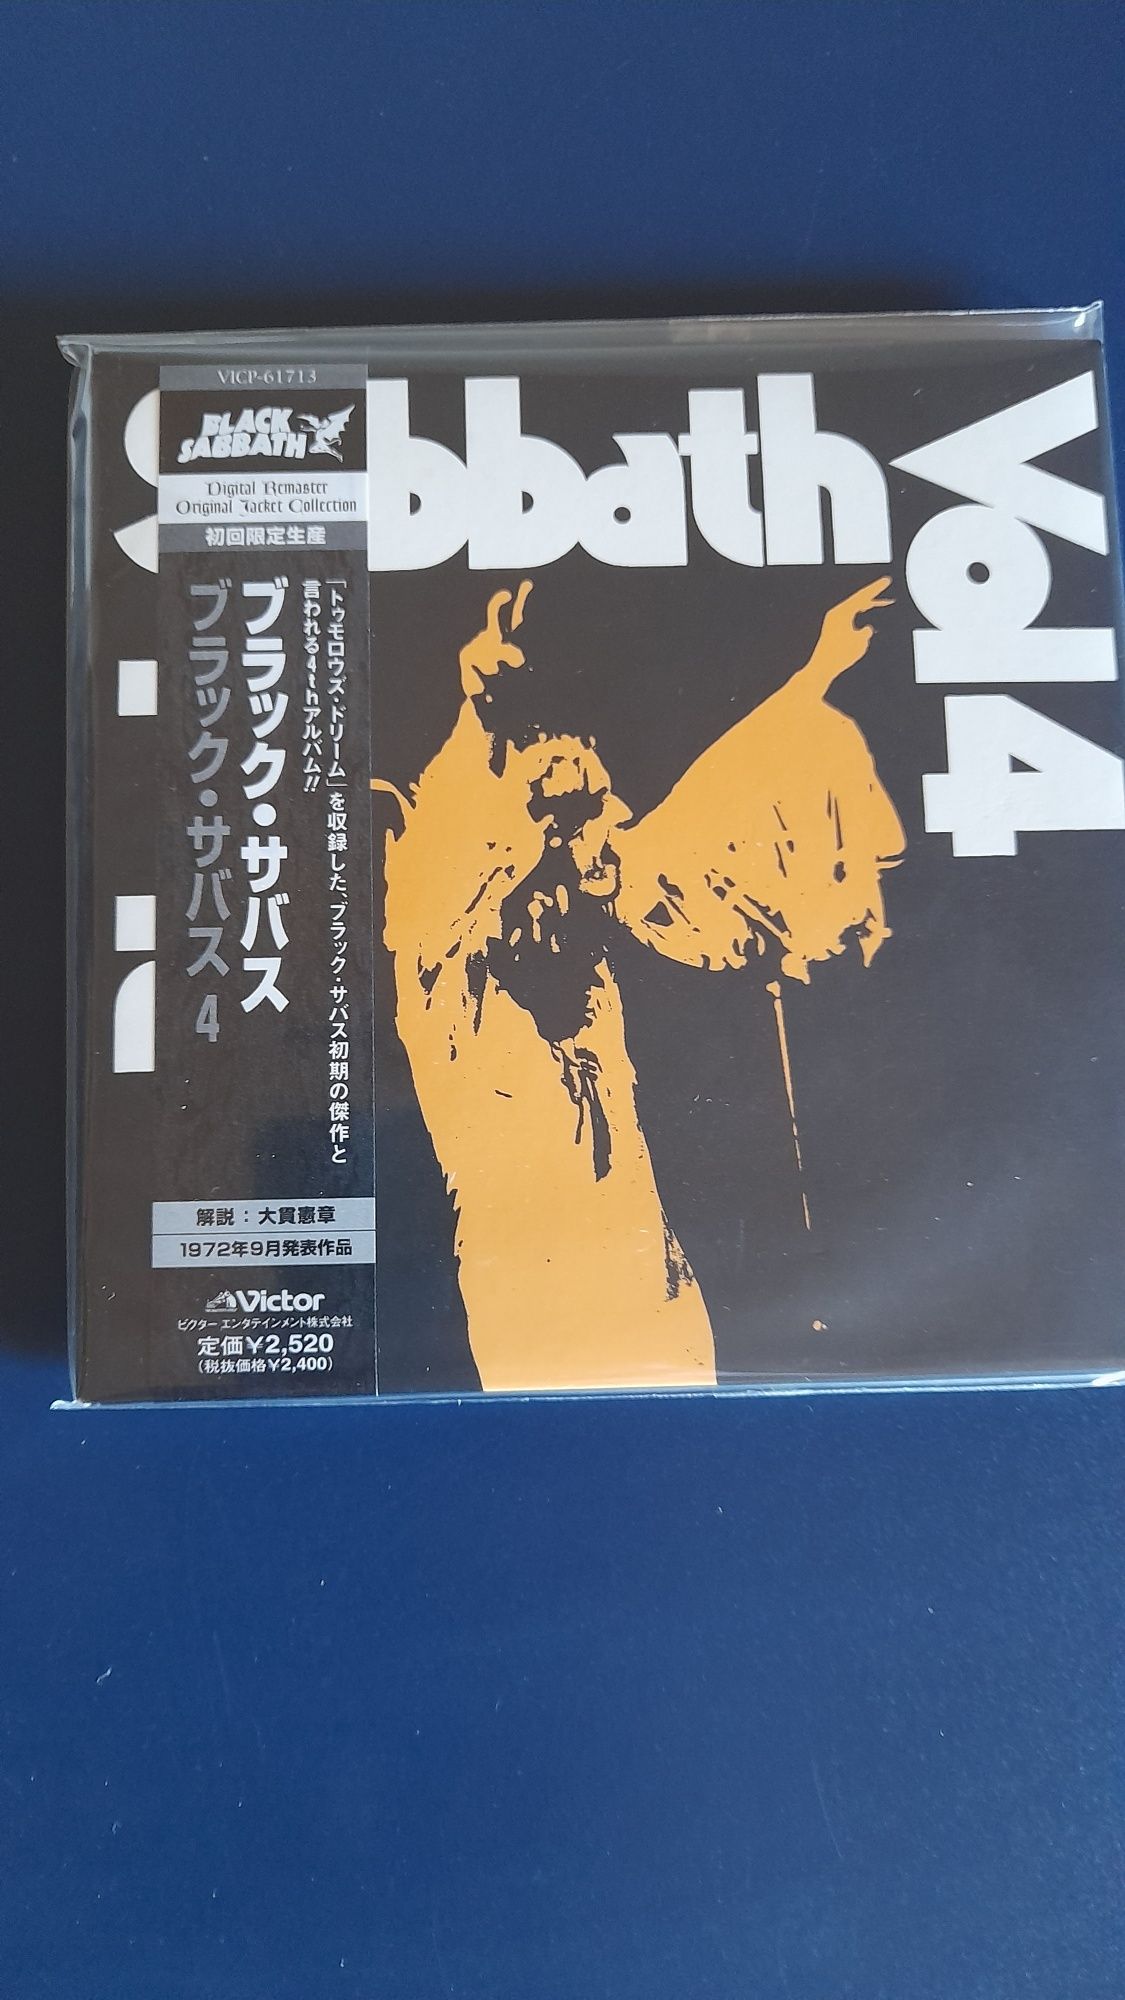 Black Sabbath. Japan CD.